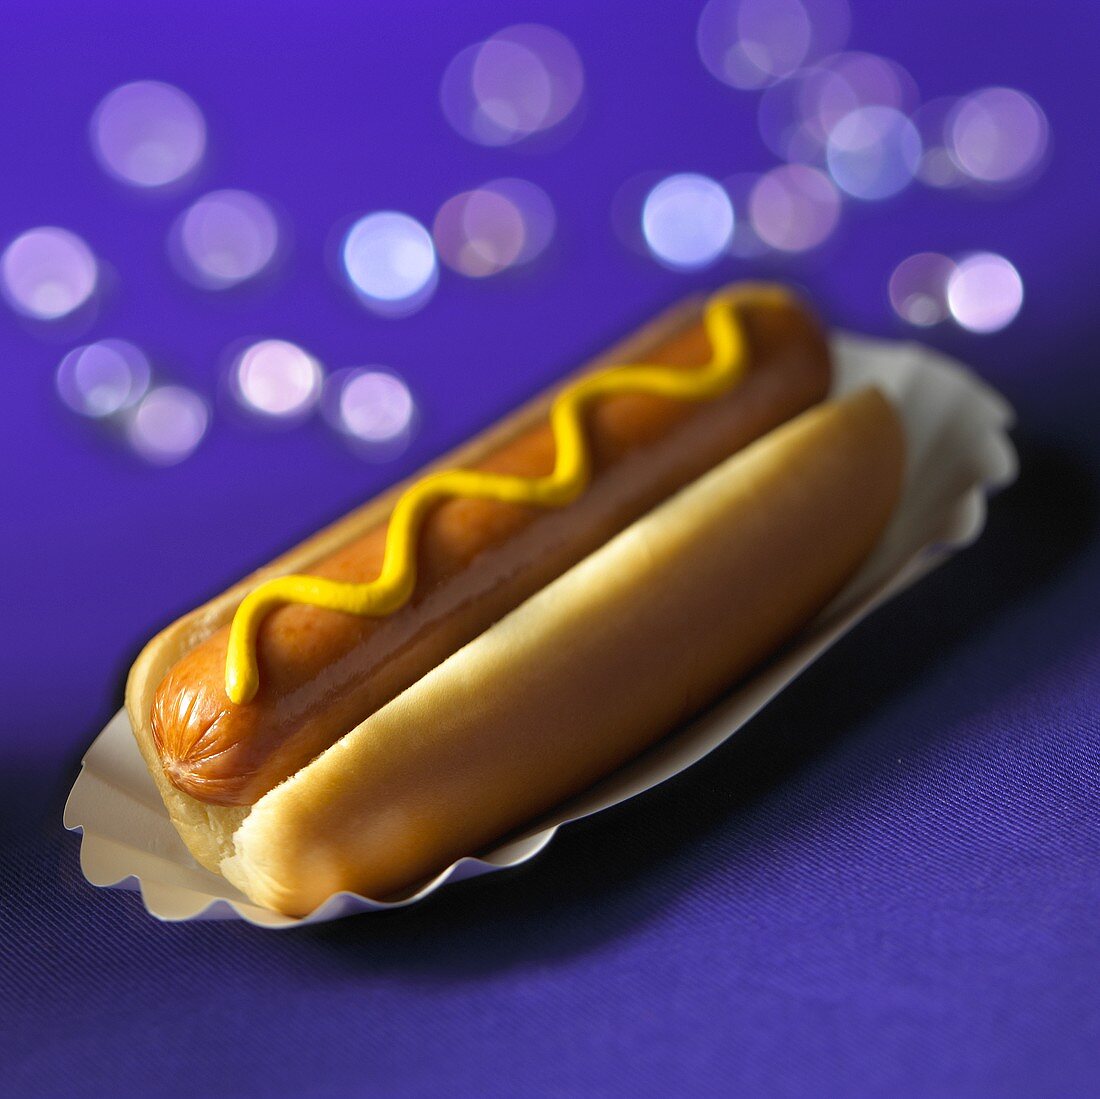 Hot dog with mustard in cardboard tray